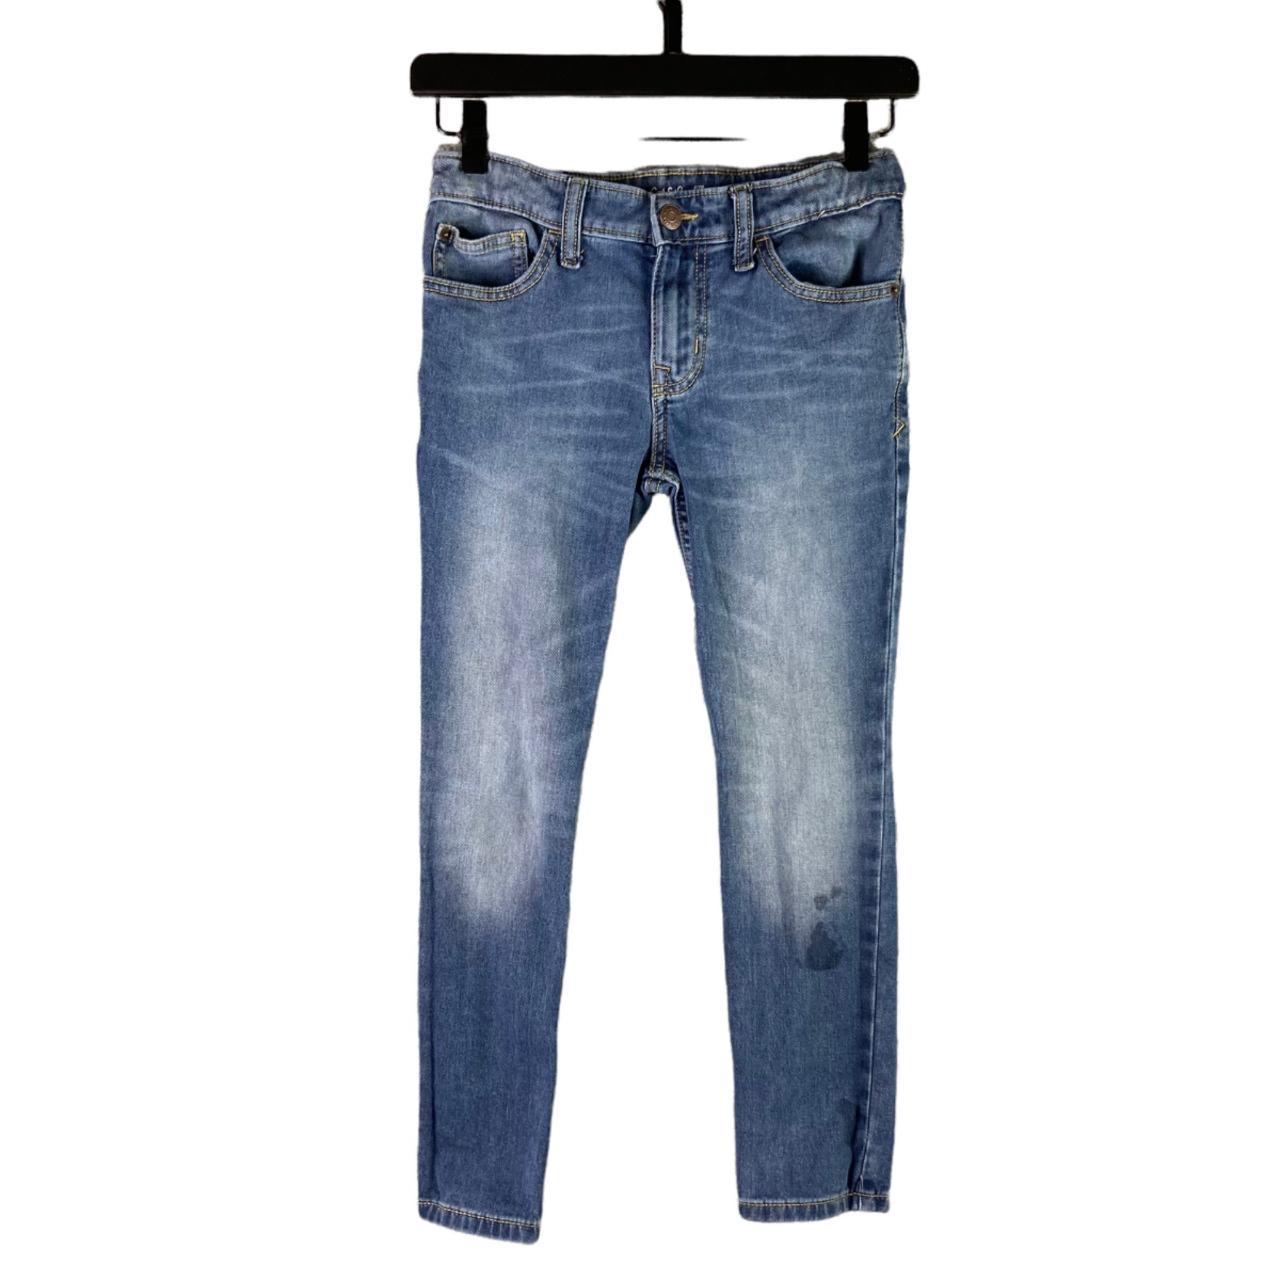 Cat & Jack Jeans Girls Size 8 Stretch Blue Denim... - Depop